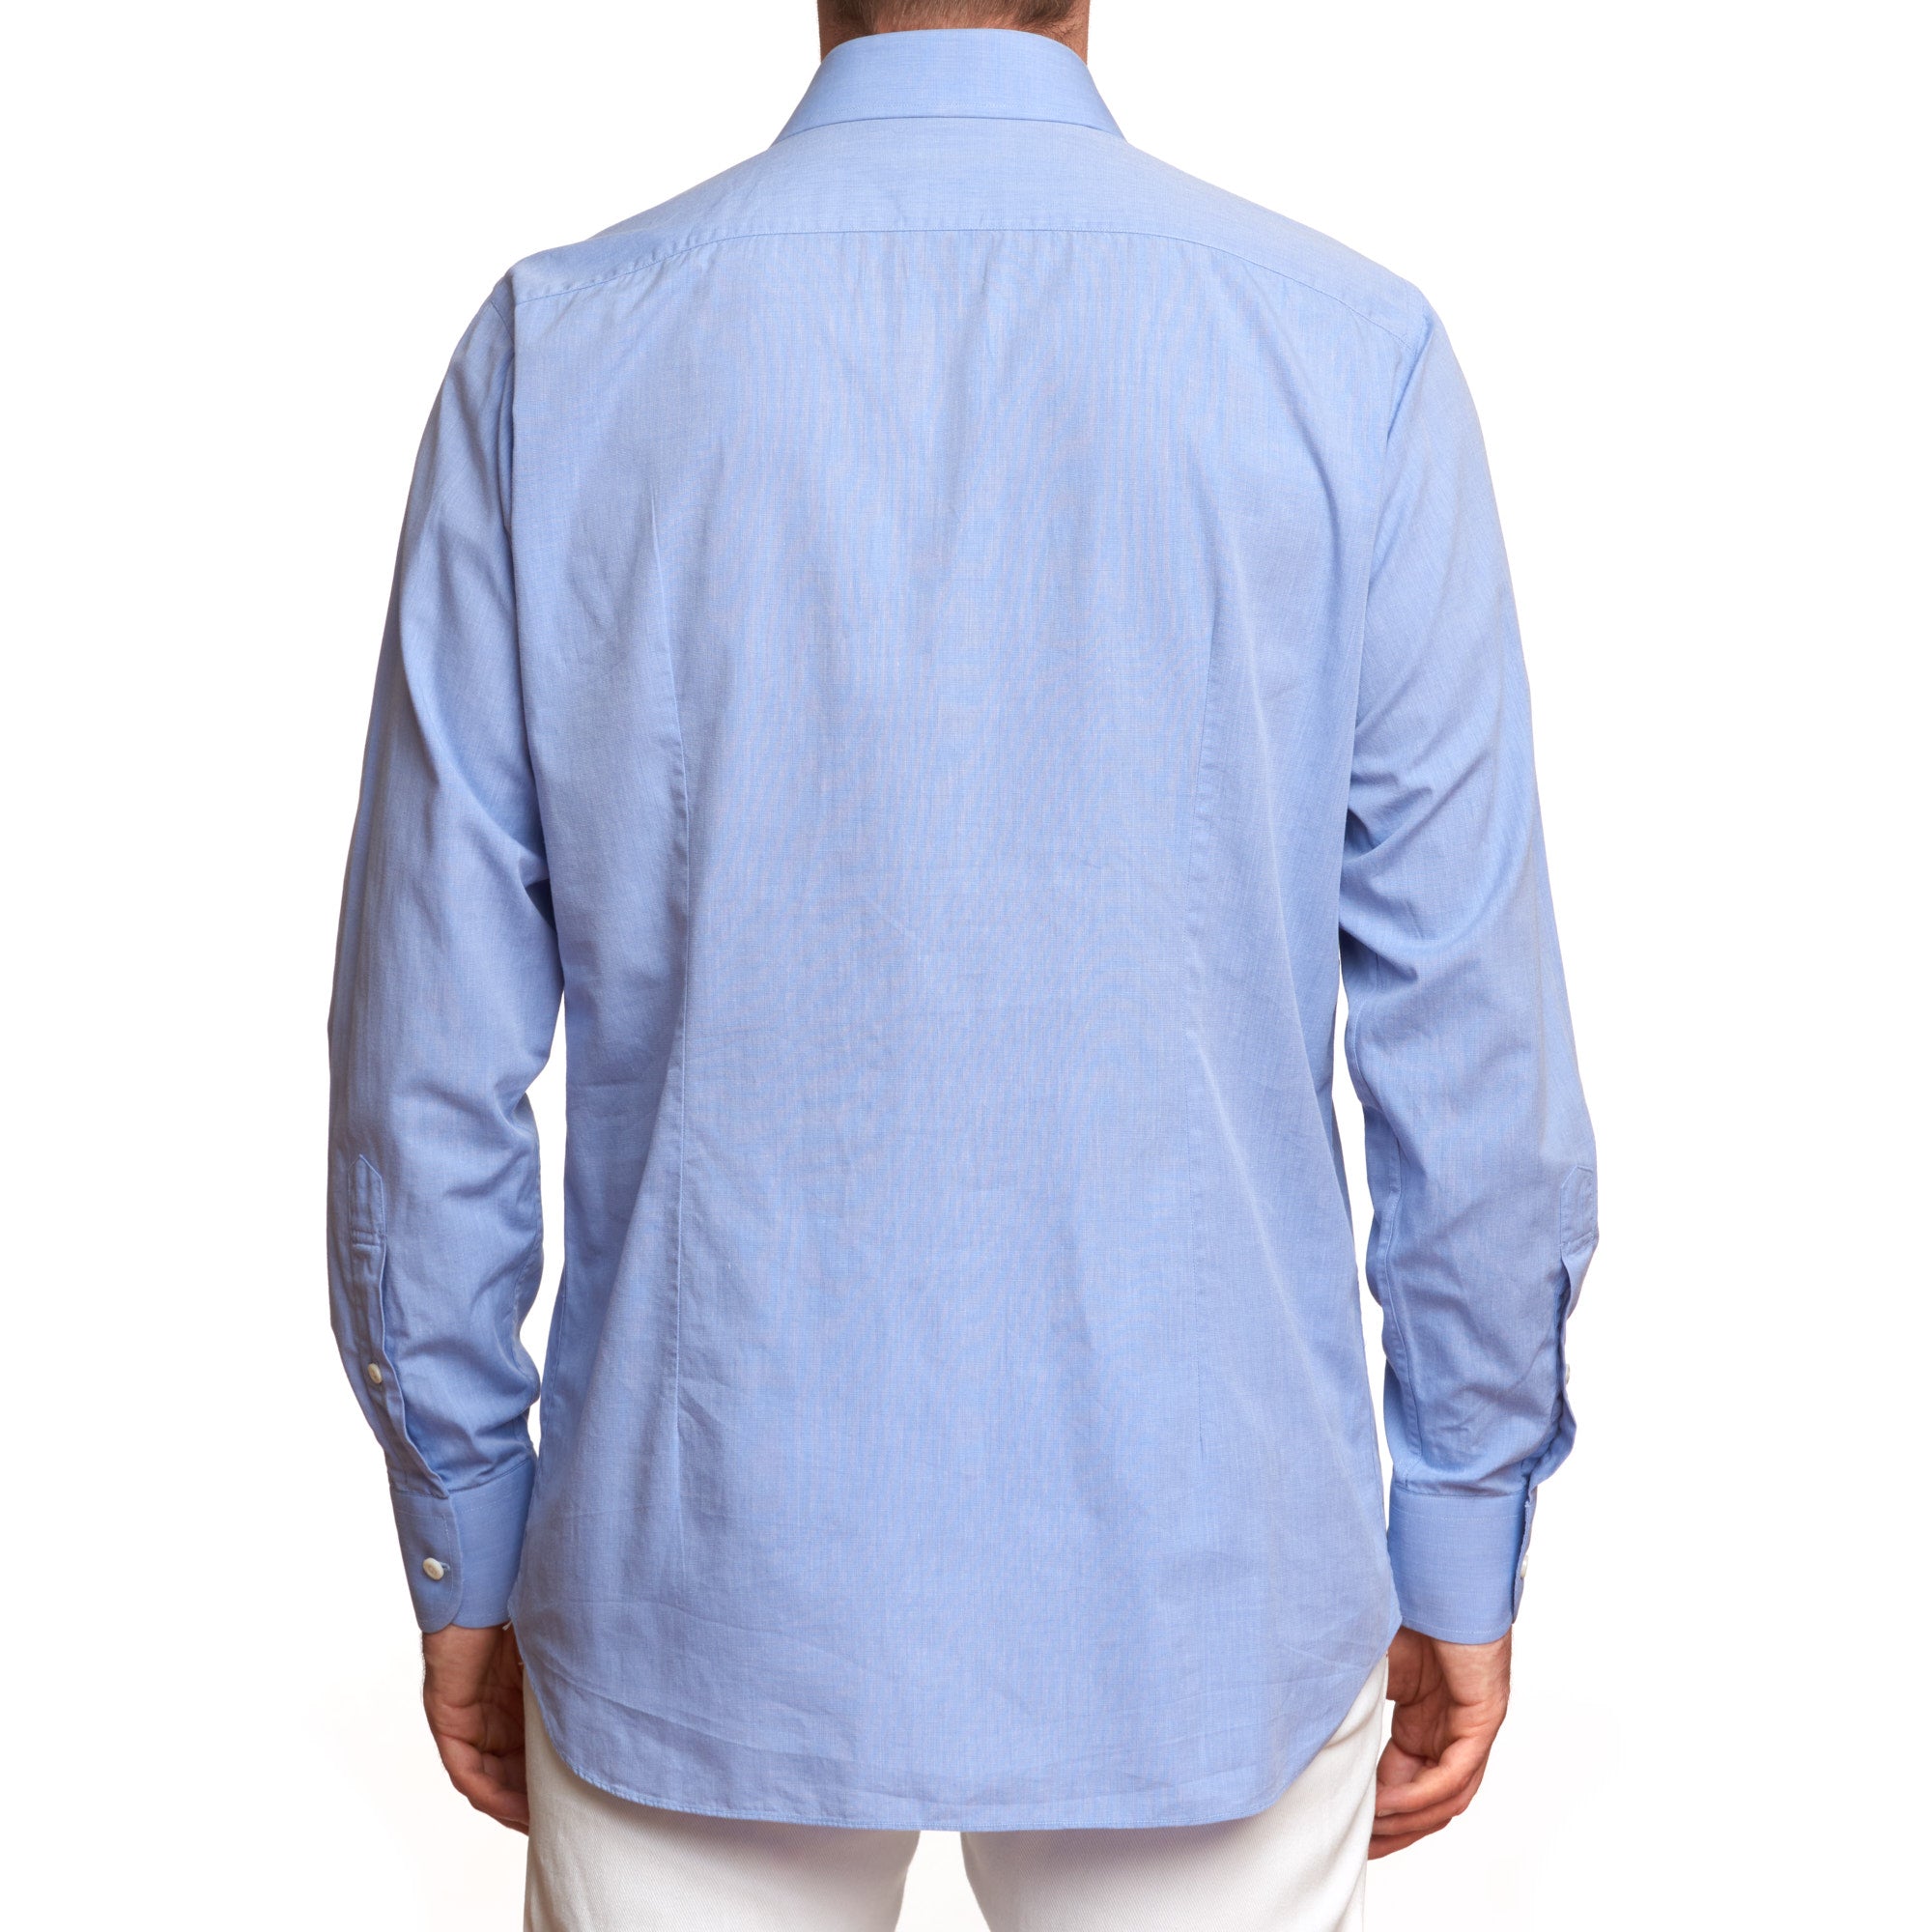 BESPOKE ATHENS Blue Cotton End-on-End Dress Shirt EU L US 16 Classic